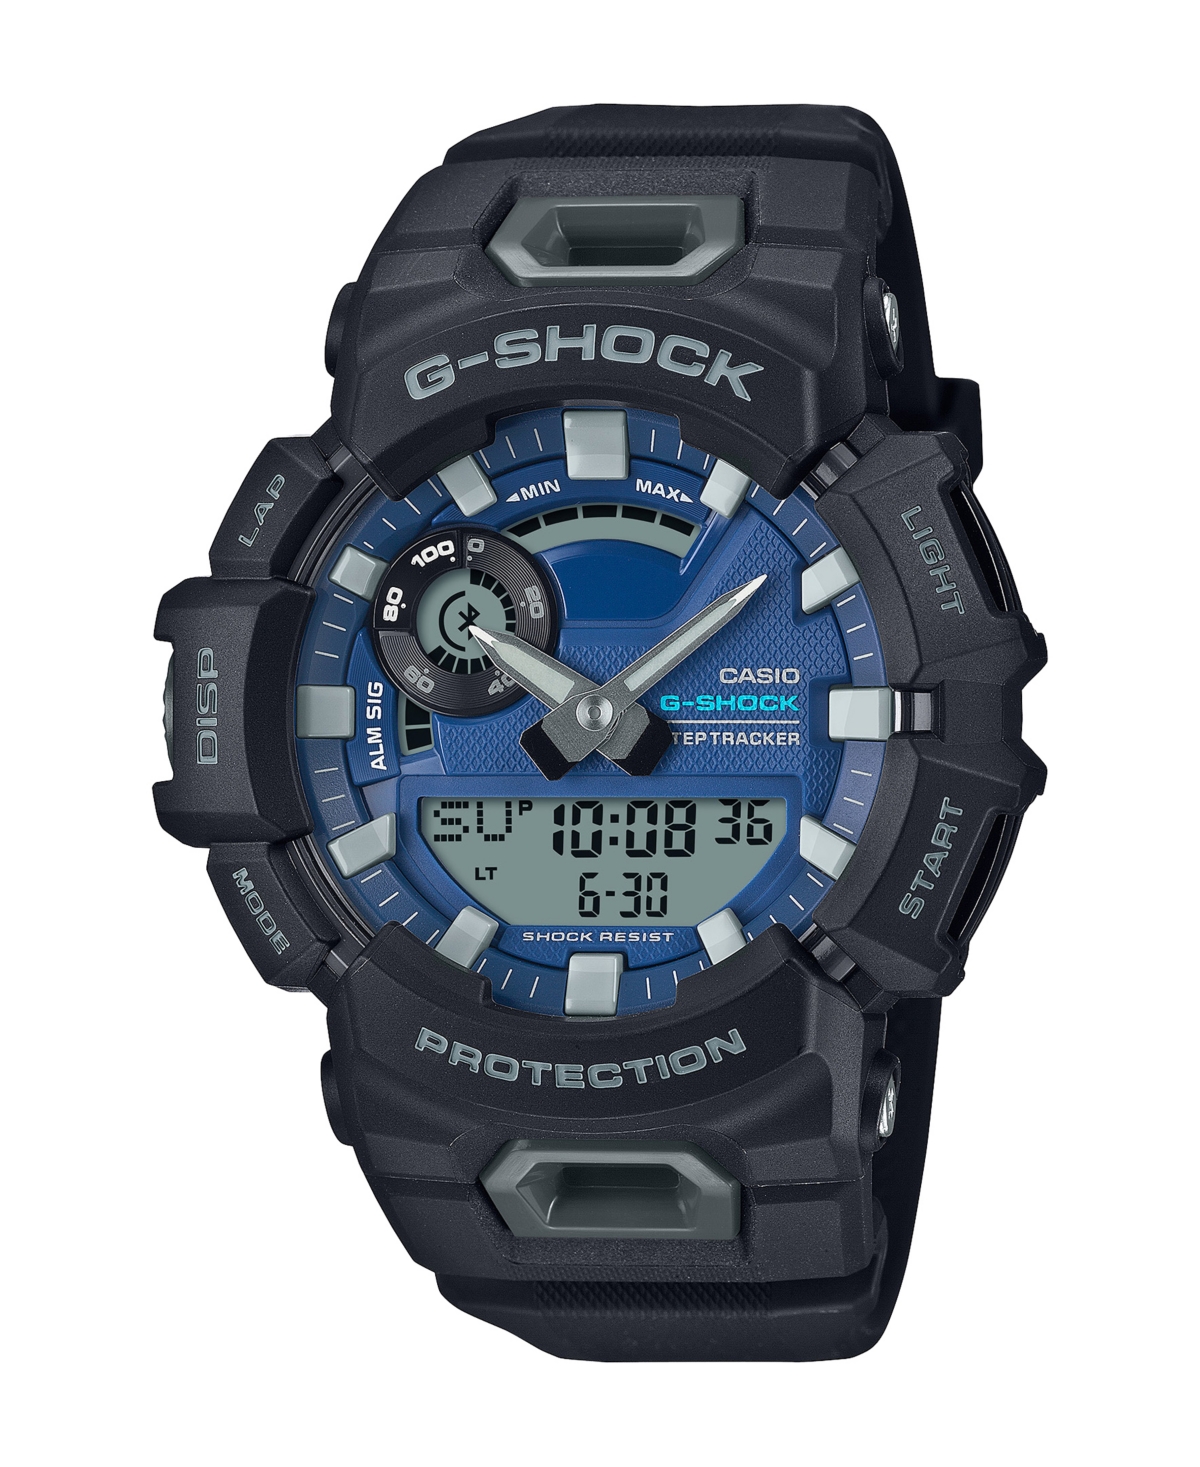 Mens Analog Digital Black Resin Watch, 51.3mm, GBA900CB-1A - Black